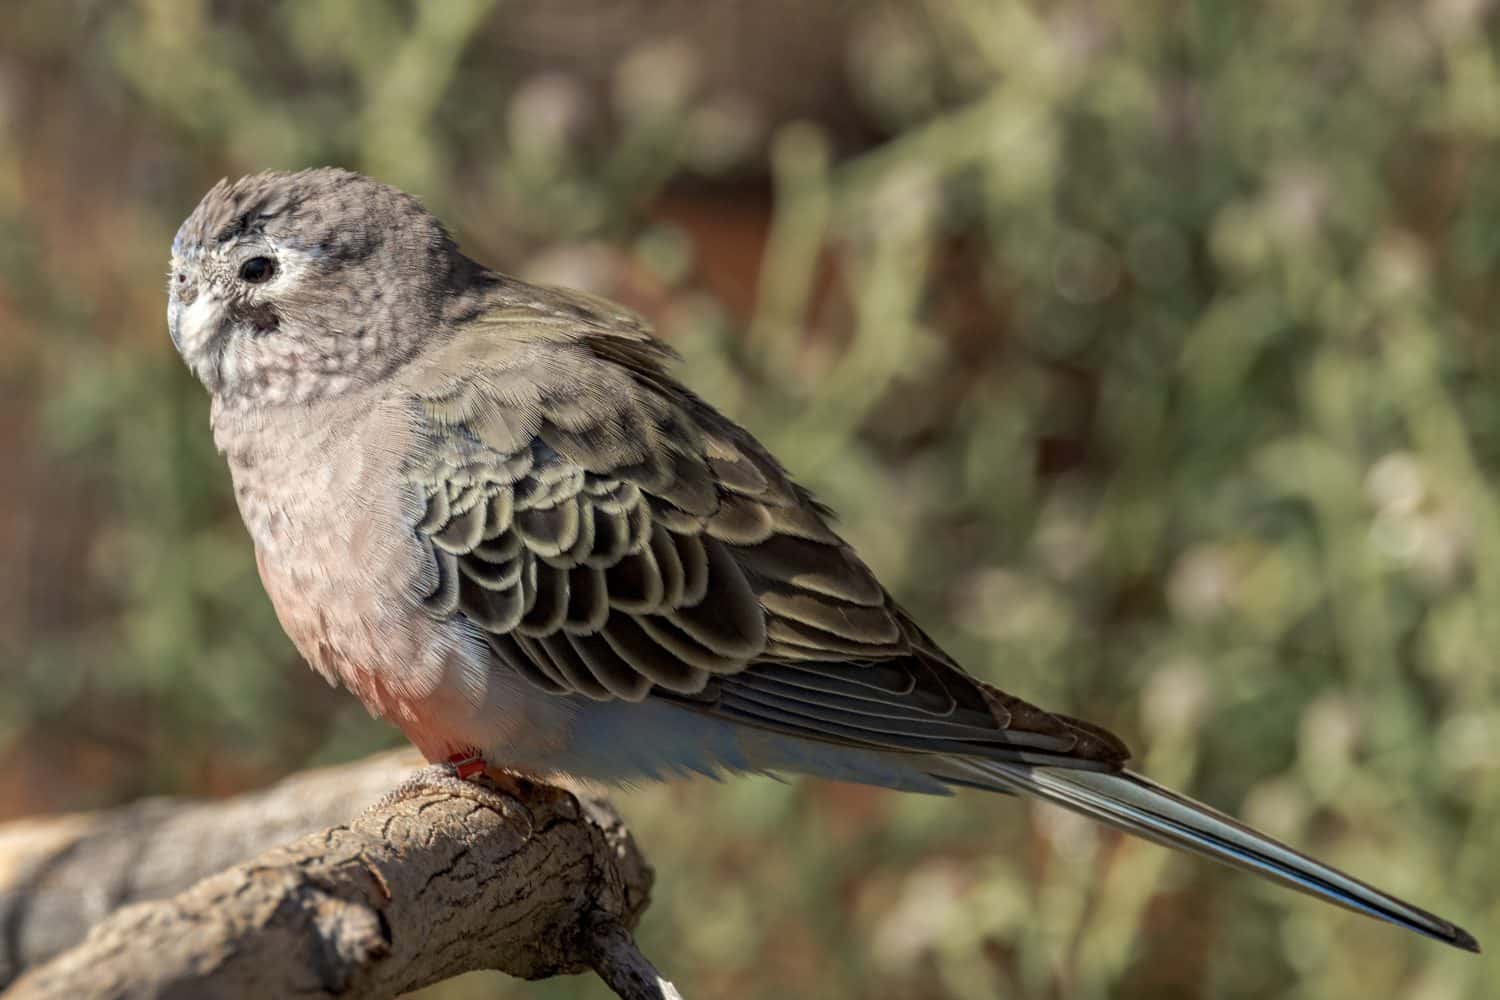 Bourke's Parrot in Northern Territory Australia